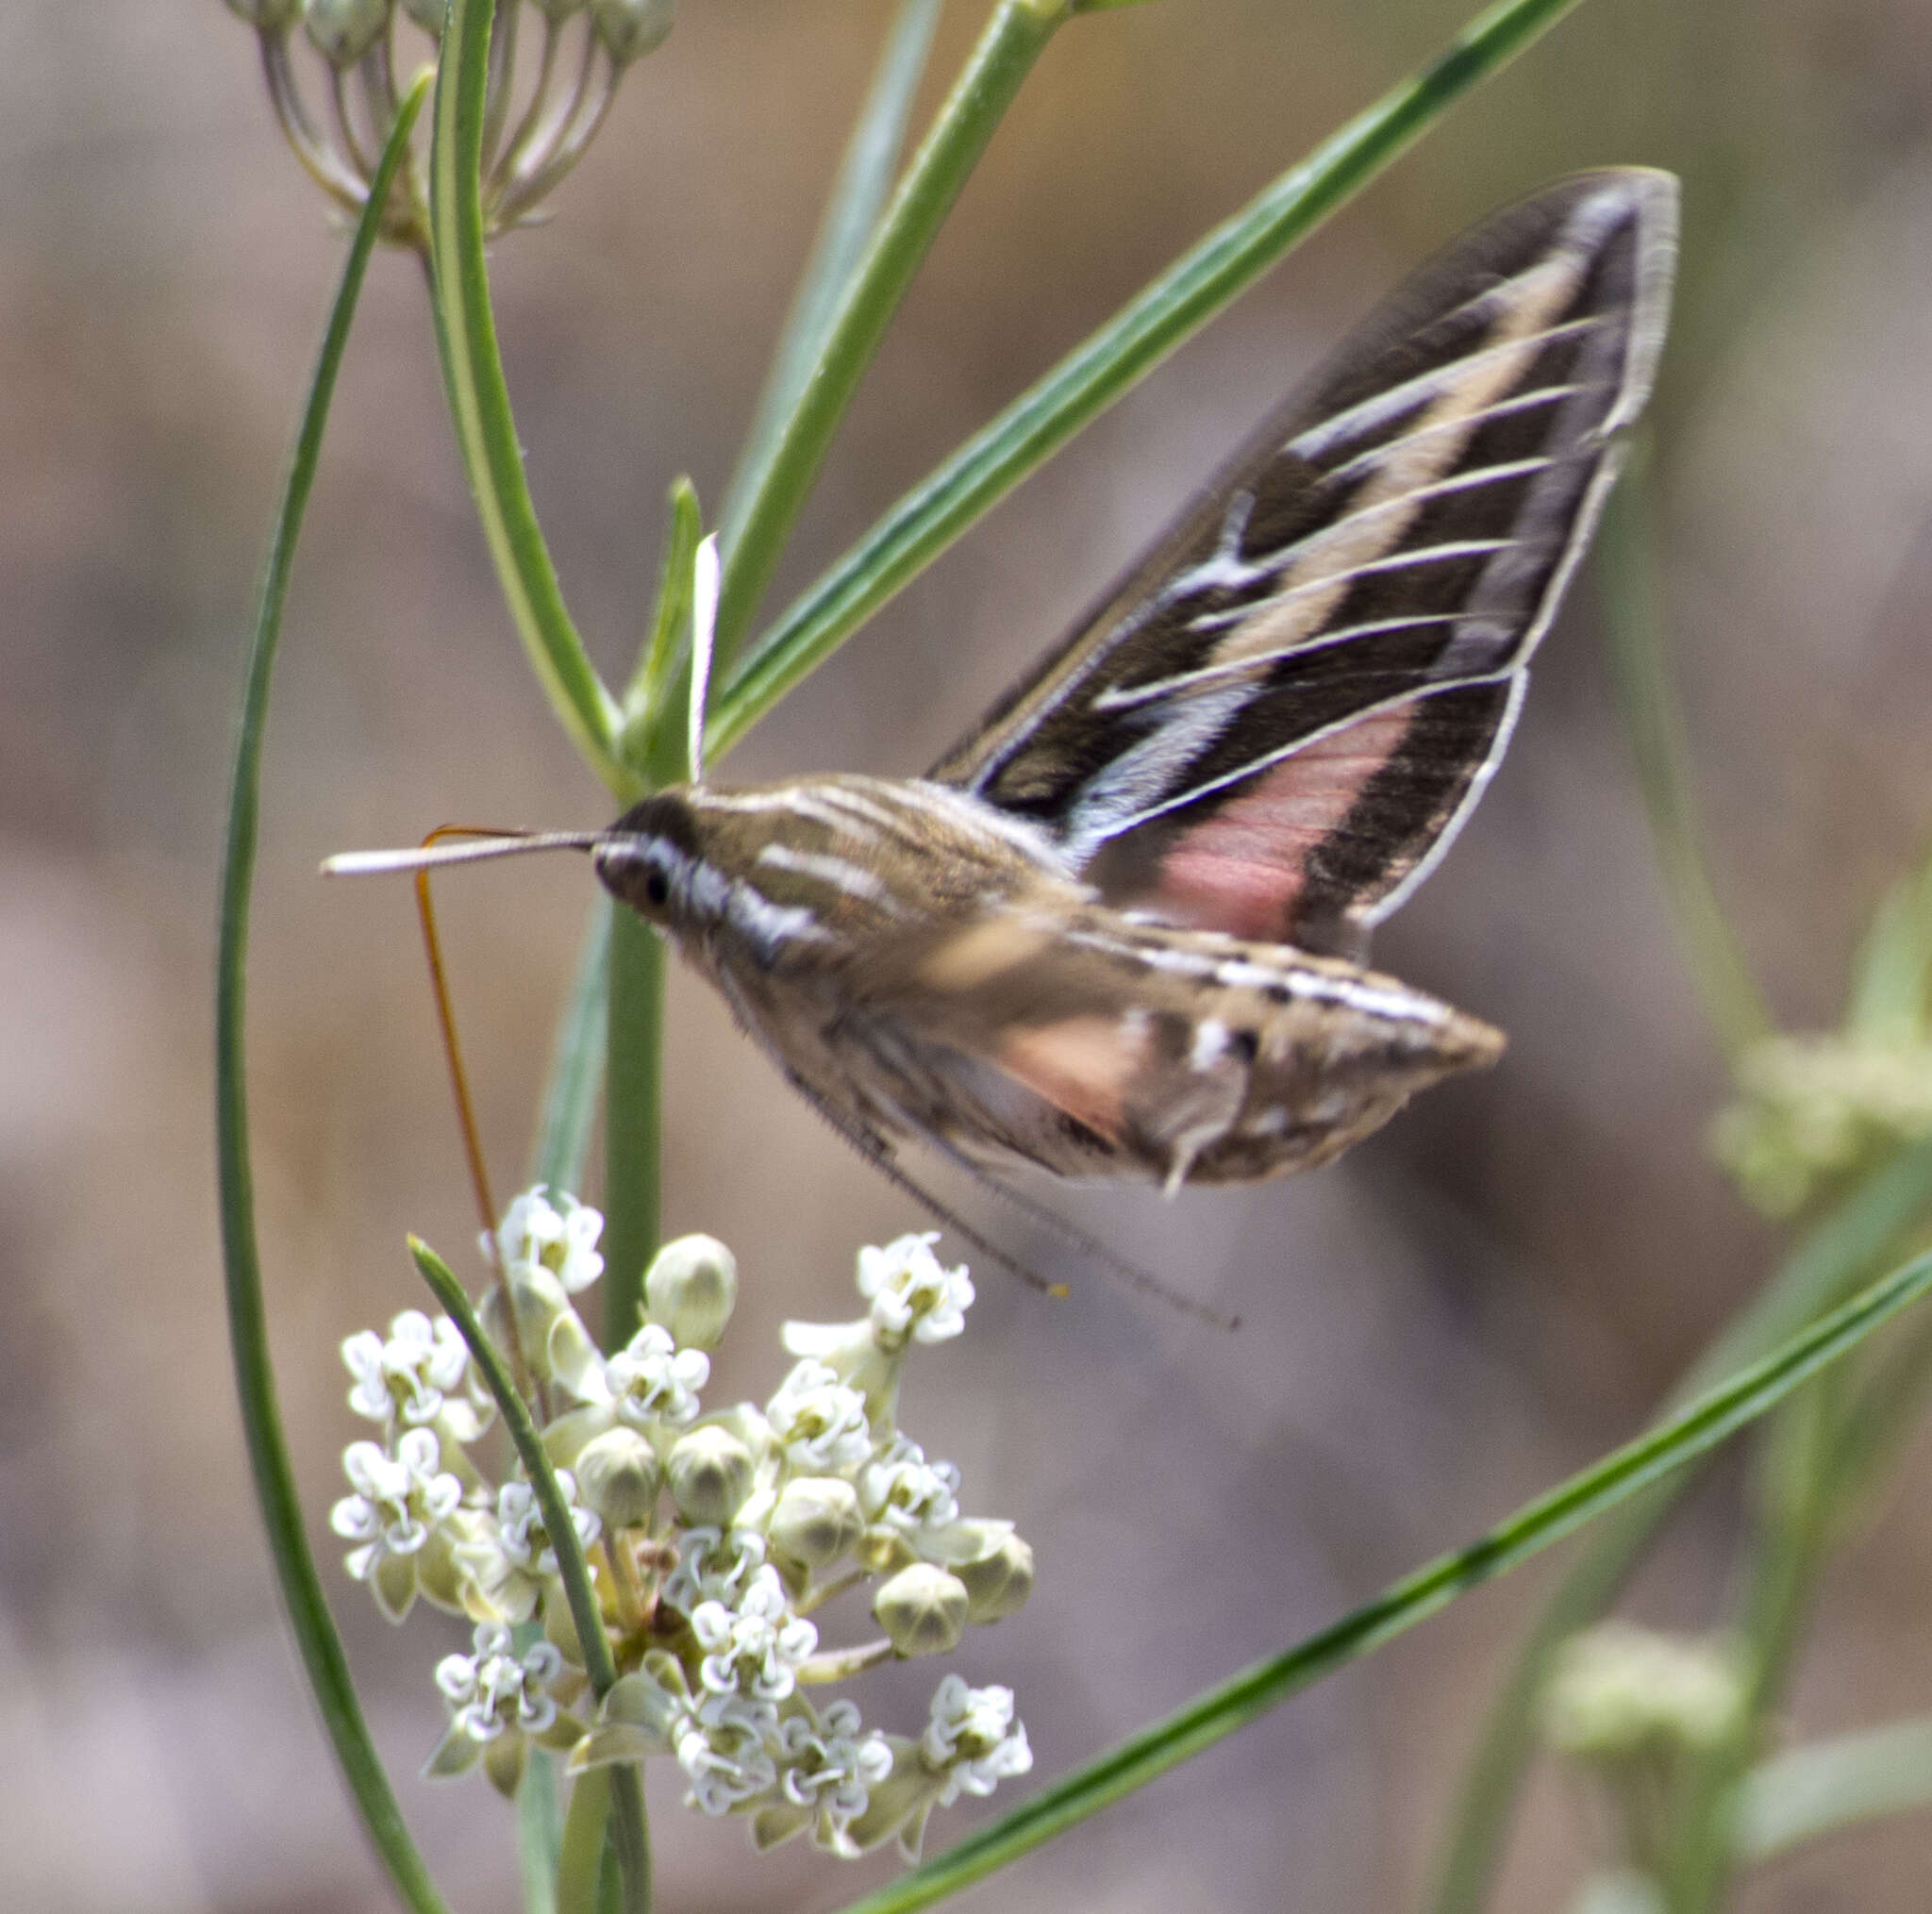 Image of horsetail milkweed